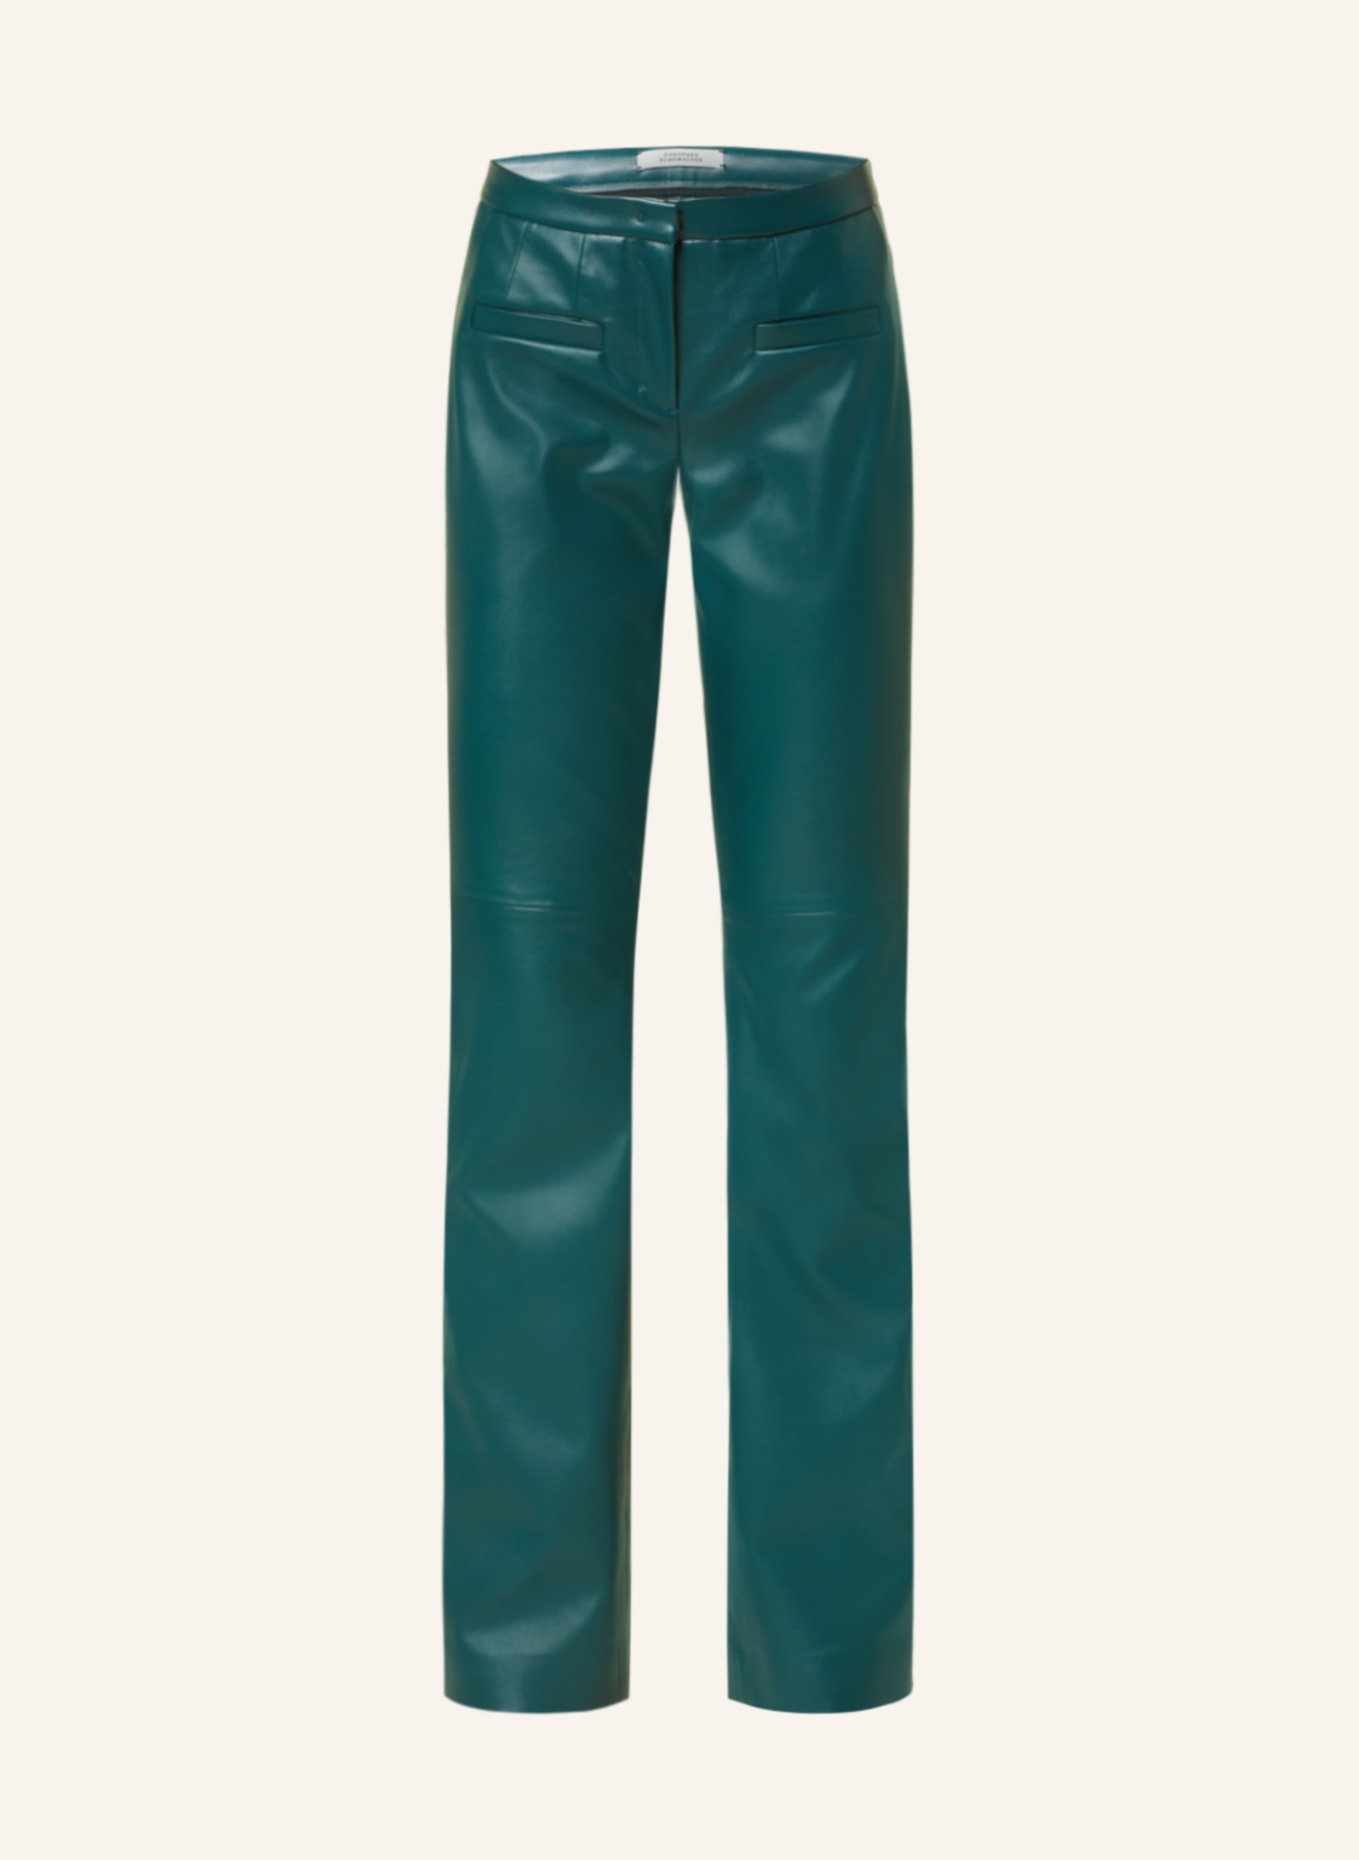 DOROTHEE SCHUMACHER Hose in Lederoptik, Farbe: PETROL (Bild 1)